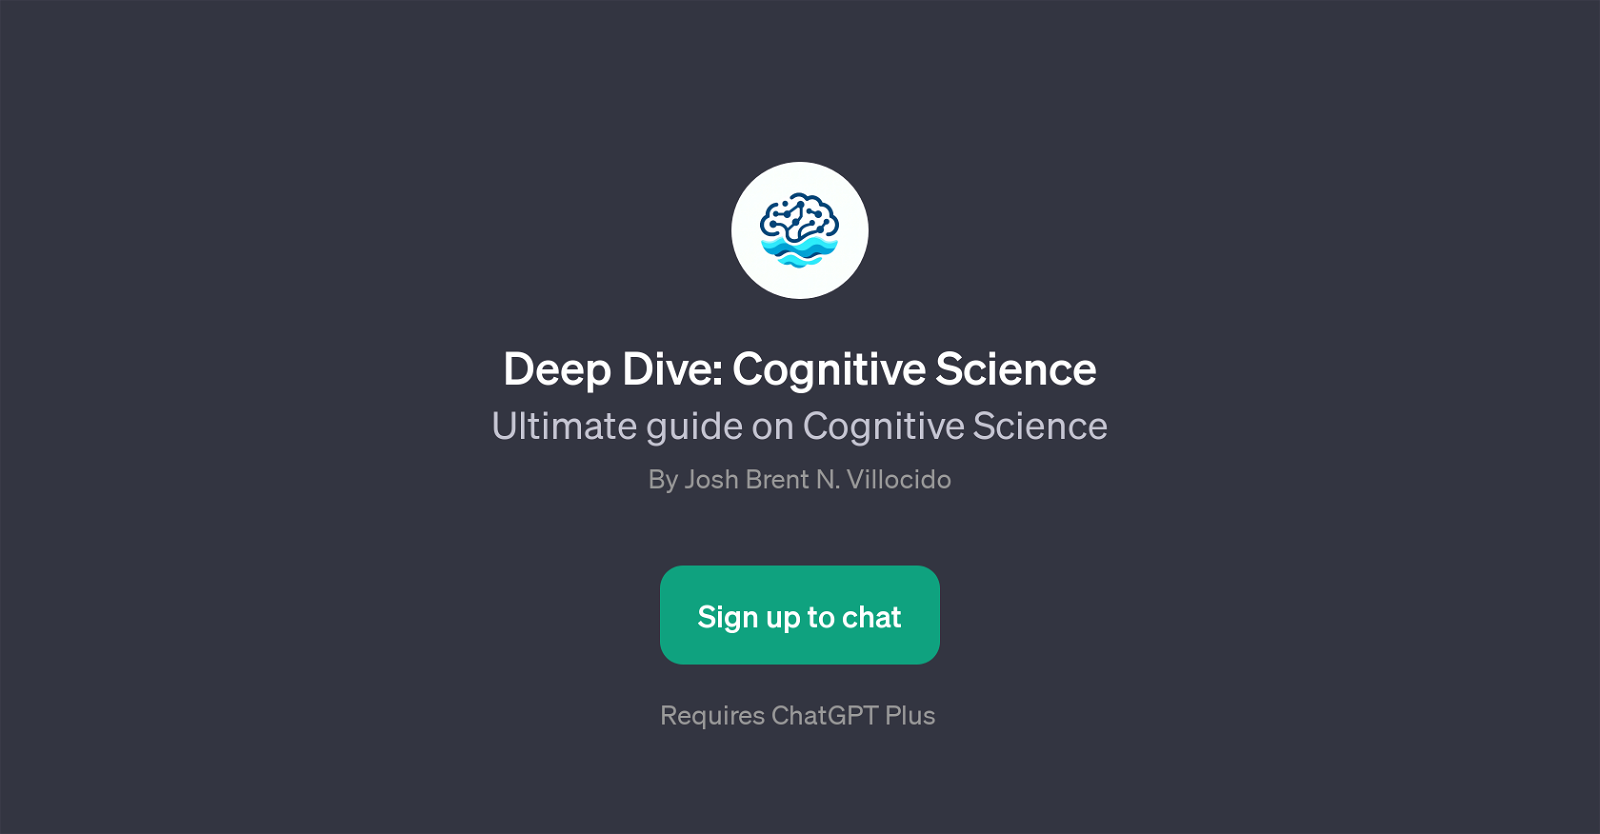 Deep Dive: Cognitive Science website